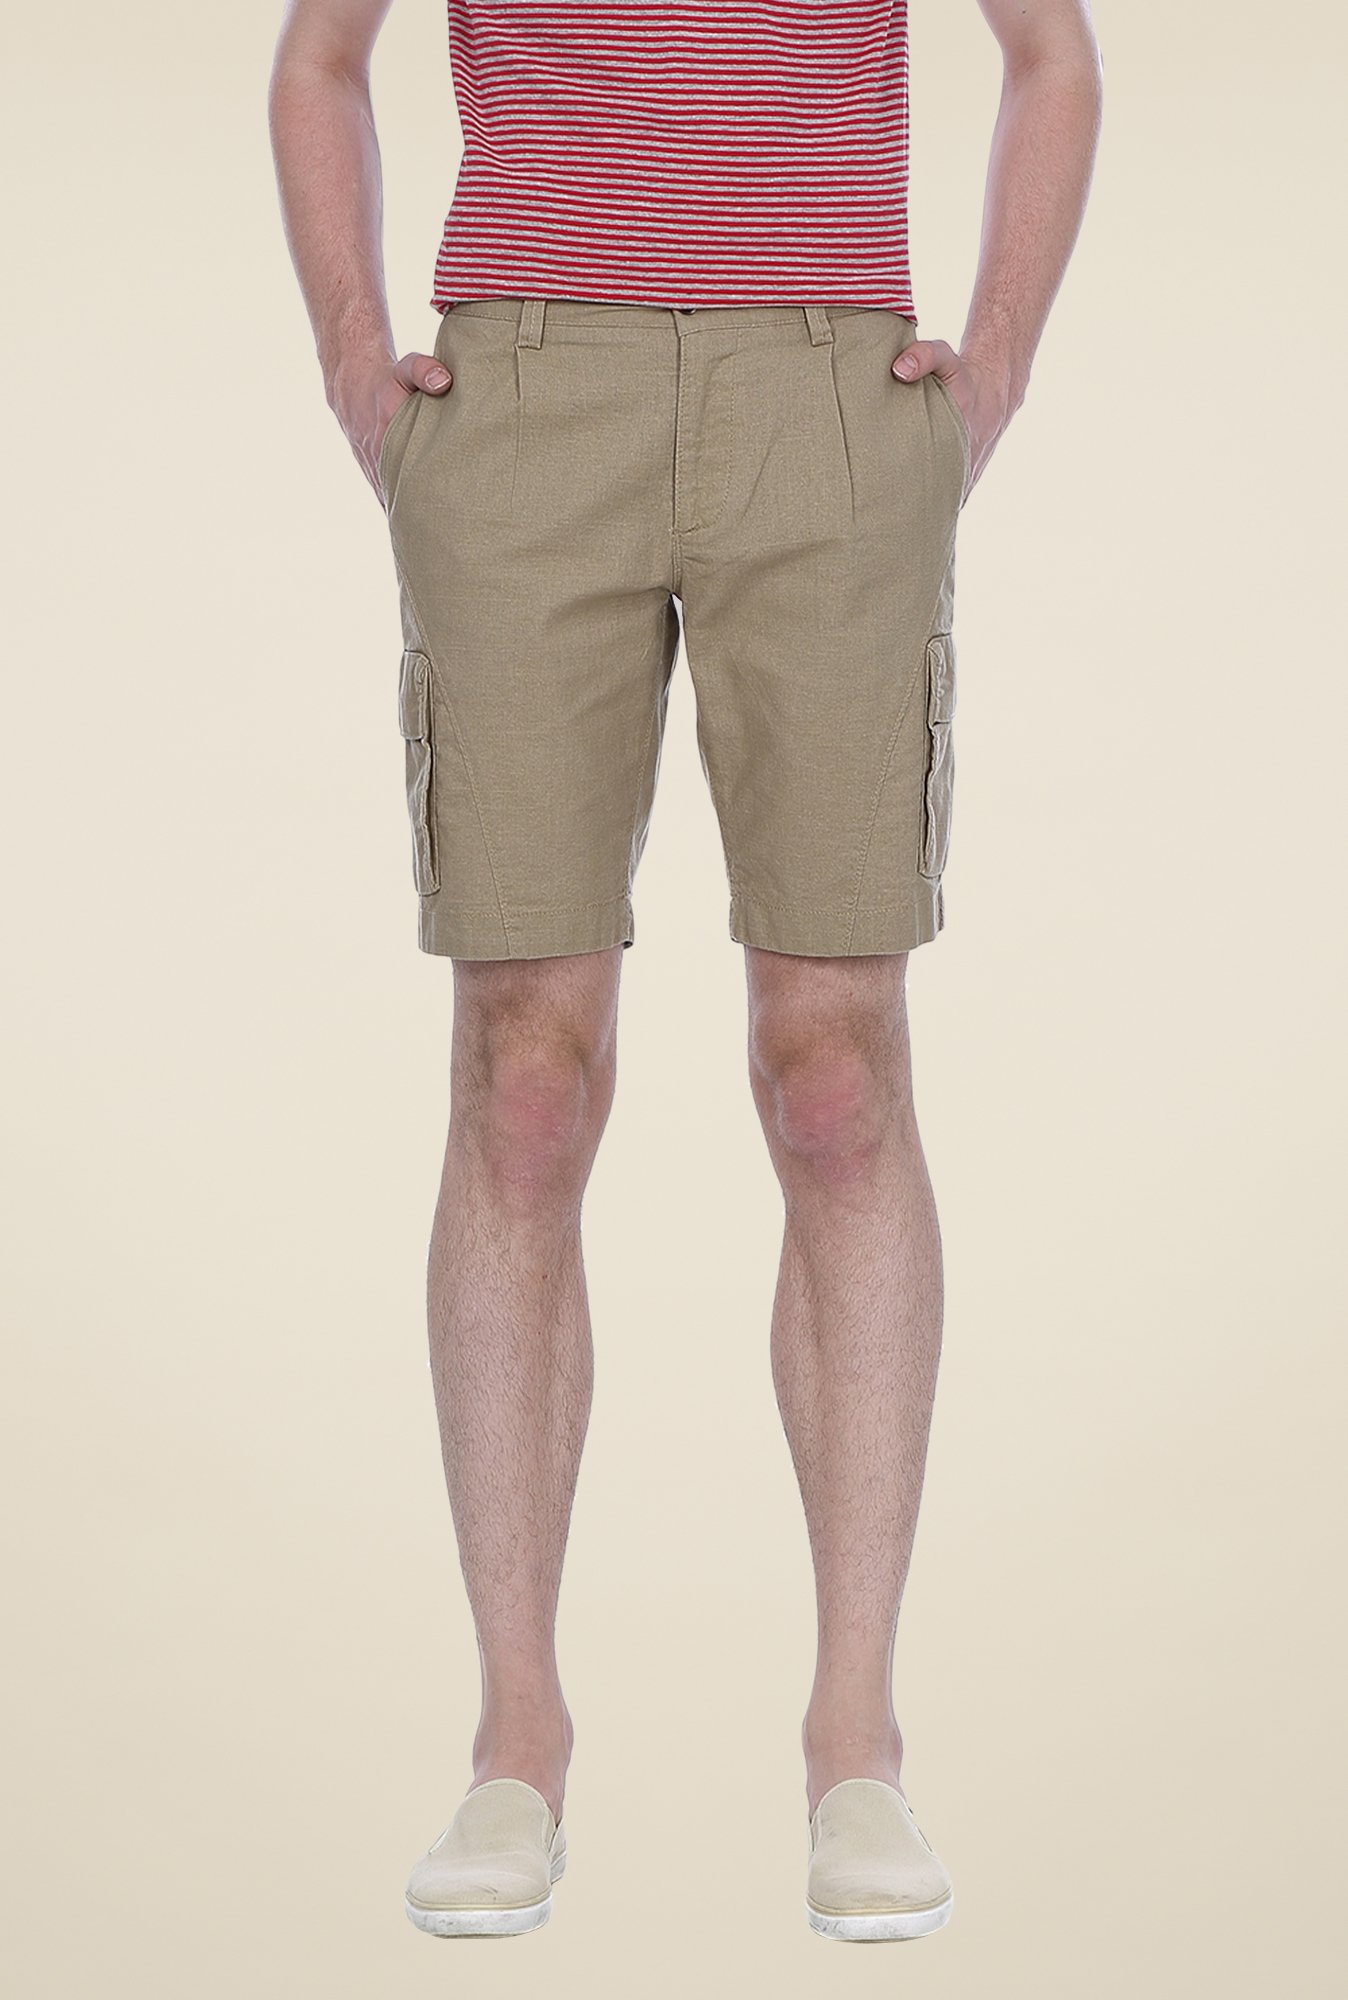 Buy Basics Beige Solid Shorts For Men Online At Tata CLiQ